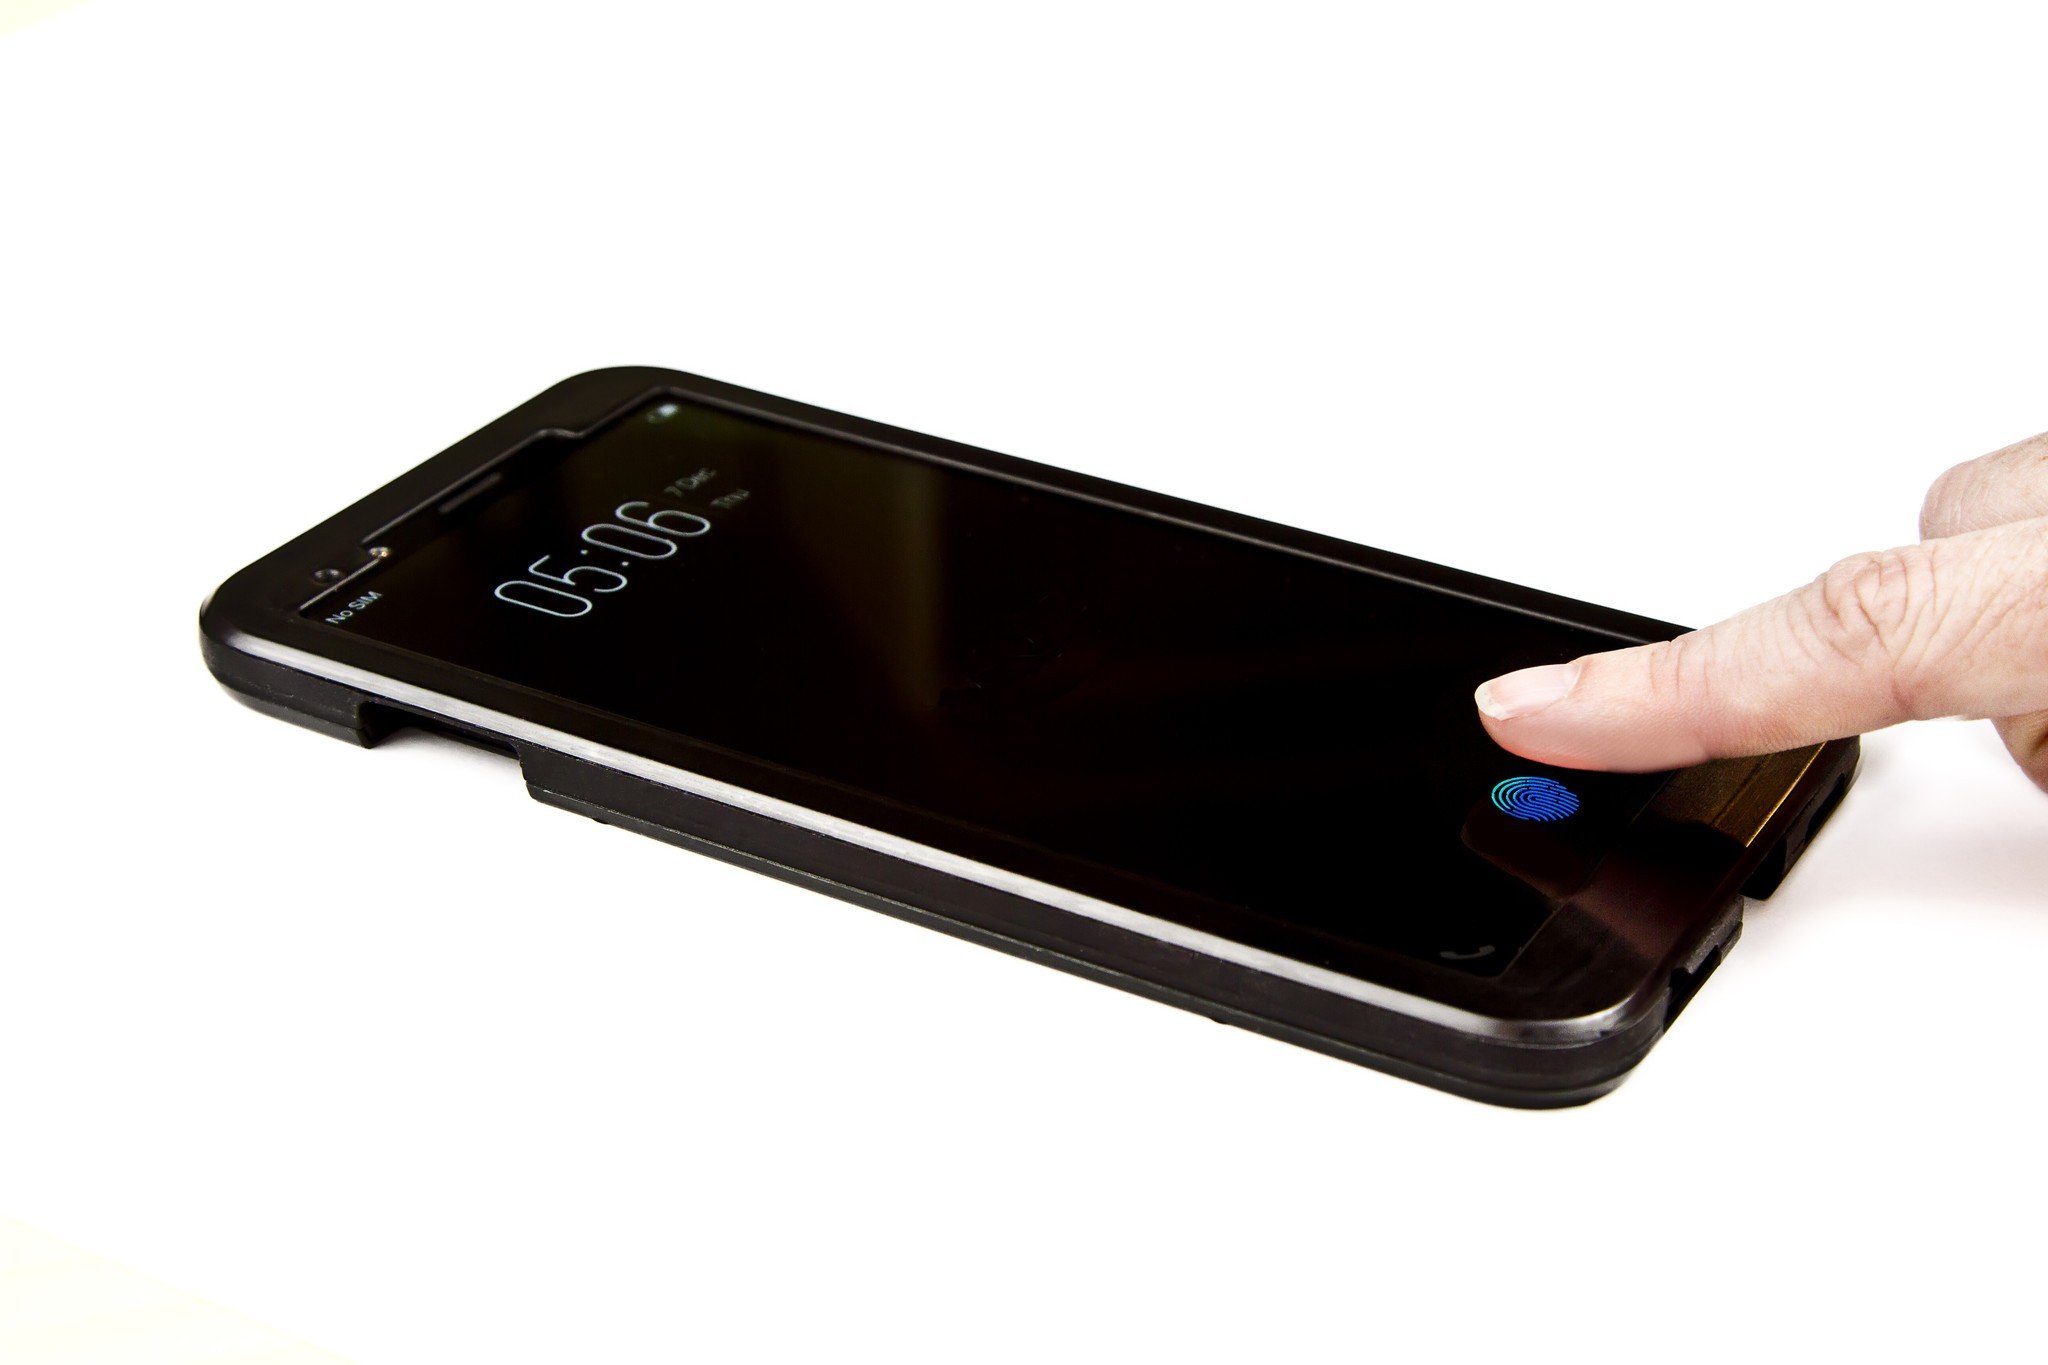 Synaptics Clear ID in-display fingerprint sensor